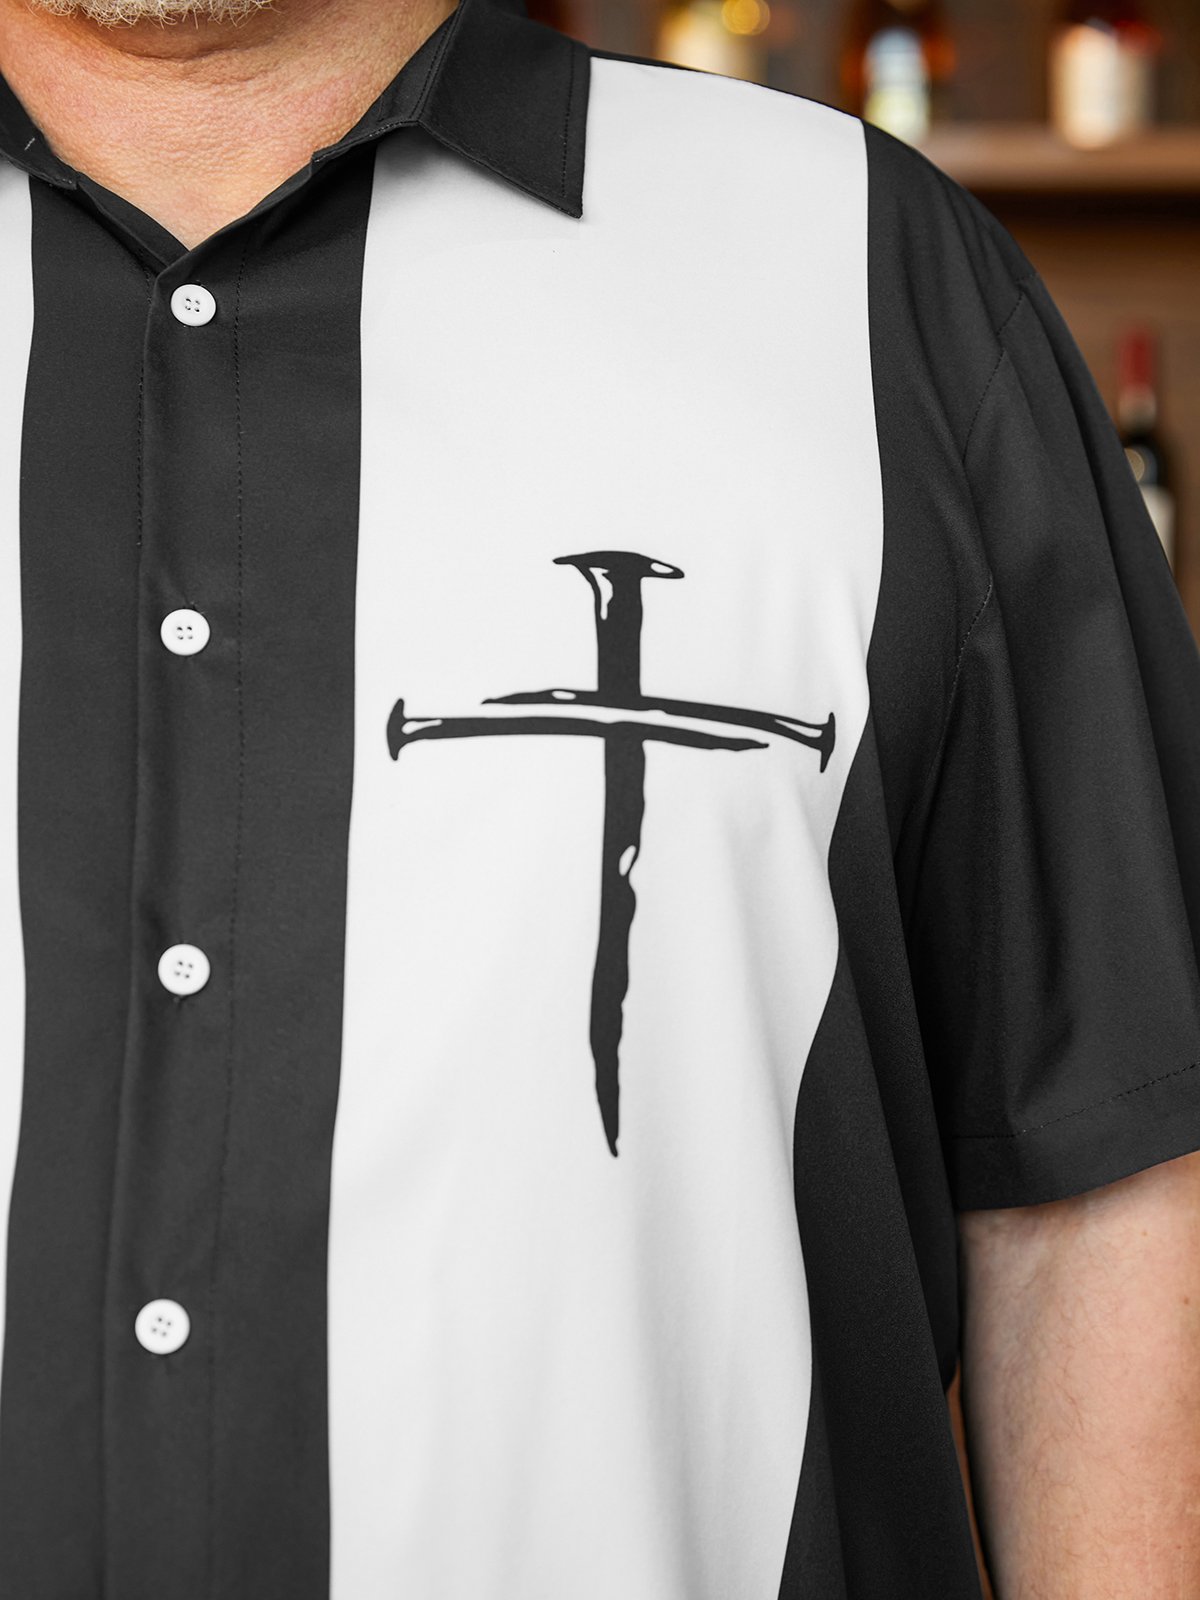 Hardaddy Big Size Crucifix Chest Pocket Short Sleeve Bowling Shirt